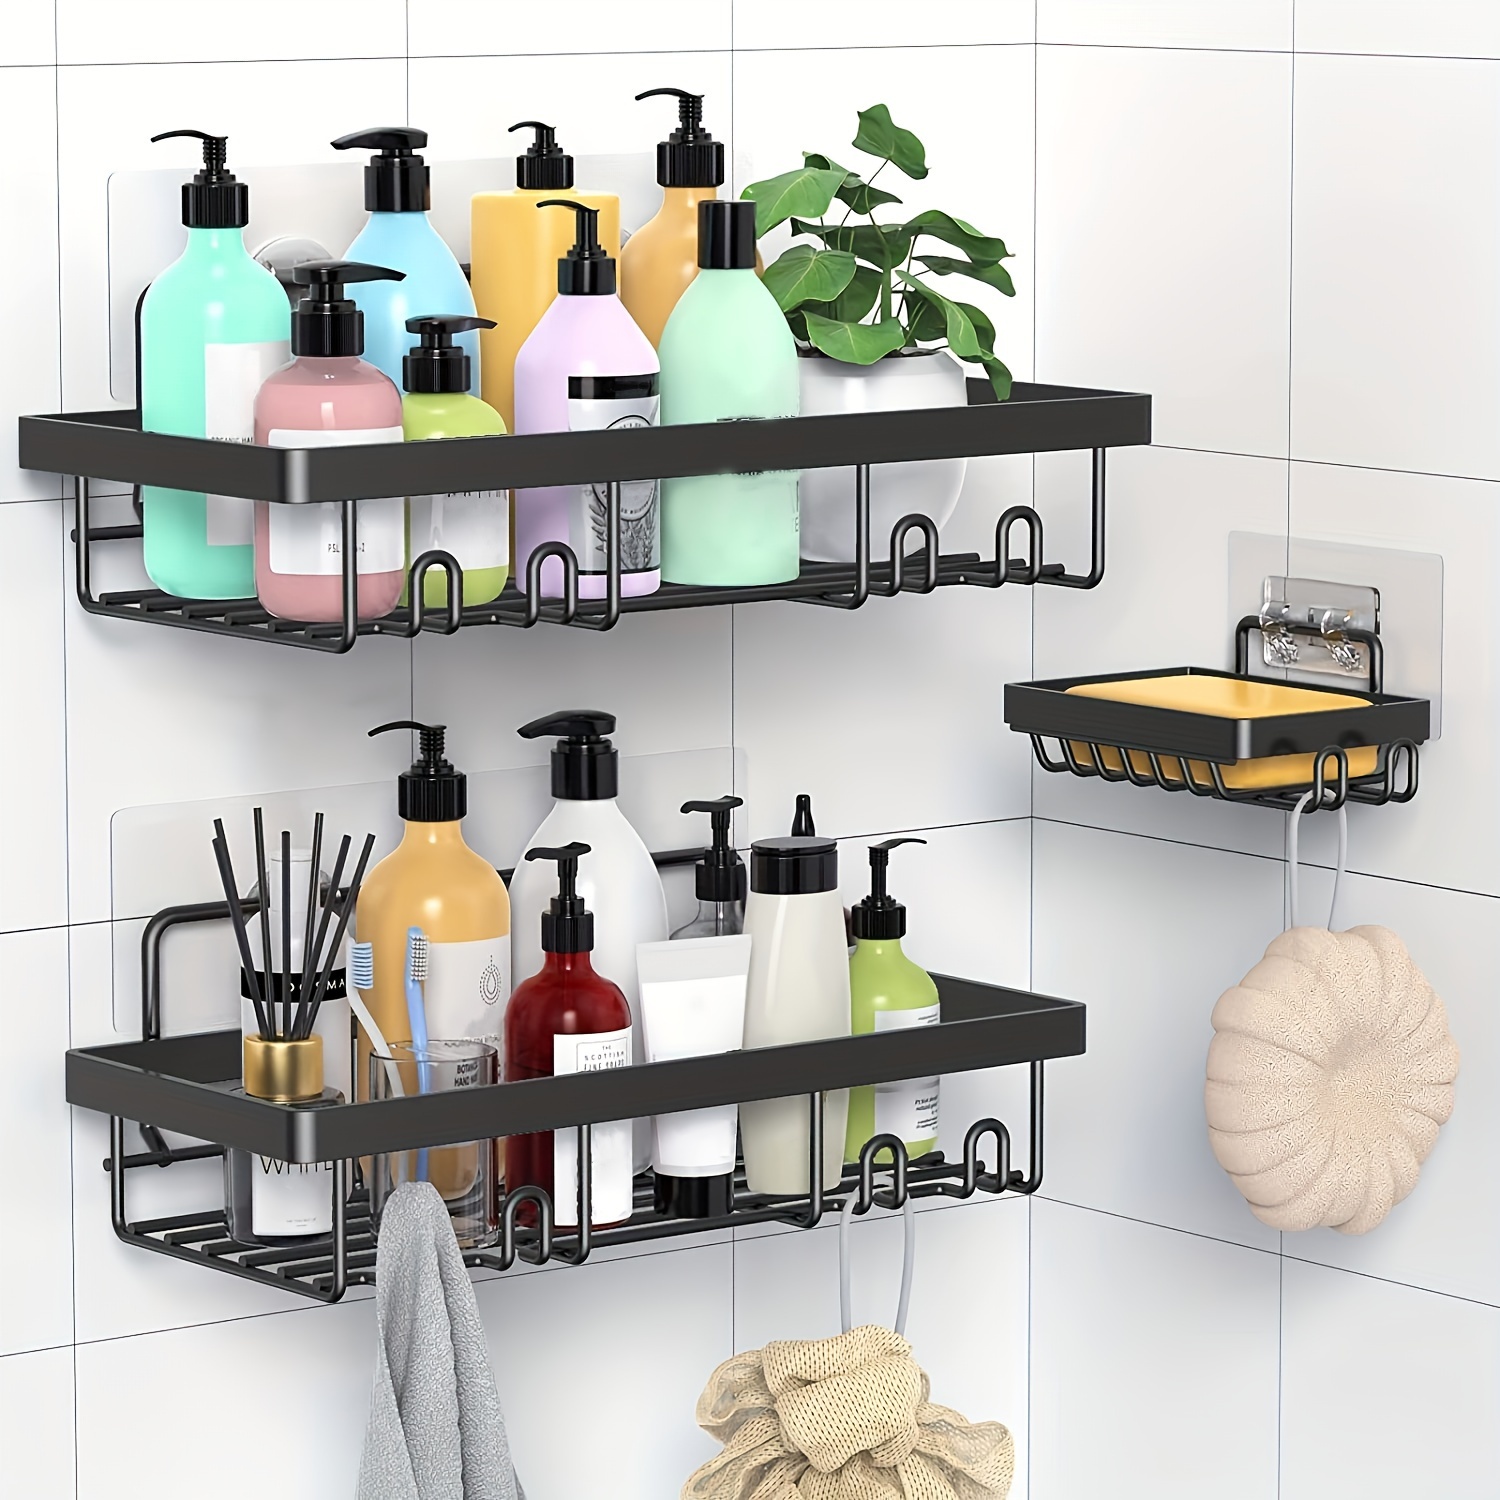 Bestcosty Rustproof Shower Caddy, Adhesive Bathroom Corner Shelf Set of 2 - Black